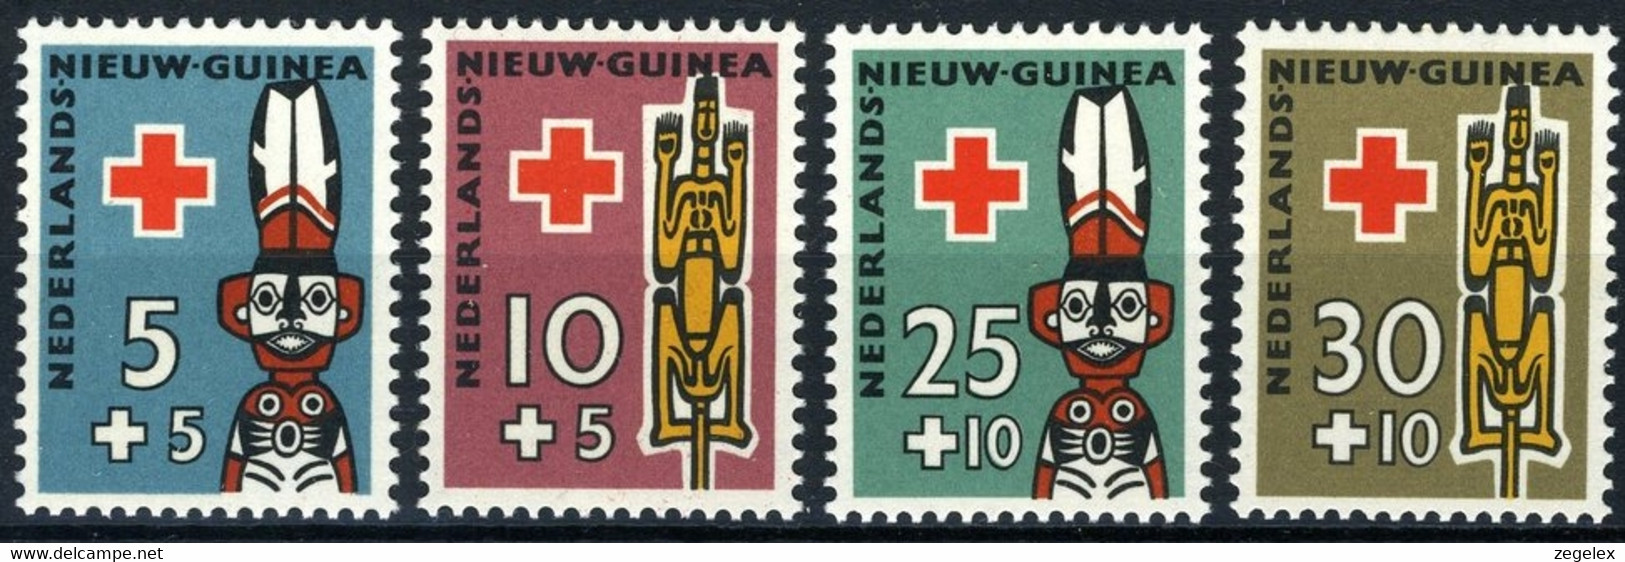 Nederlands Nieuw Guinea 1958, Rode Kruis, Red Cross NVPH 49-52 Hinged/ongestempeld - Nouvelle Guinée Néerlandaise